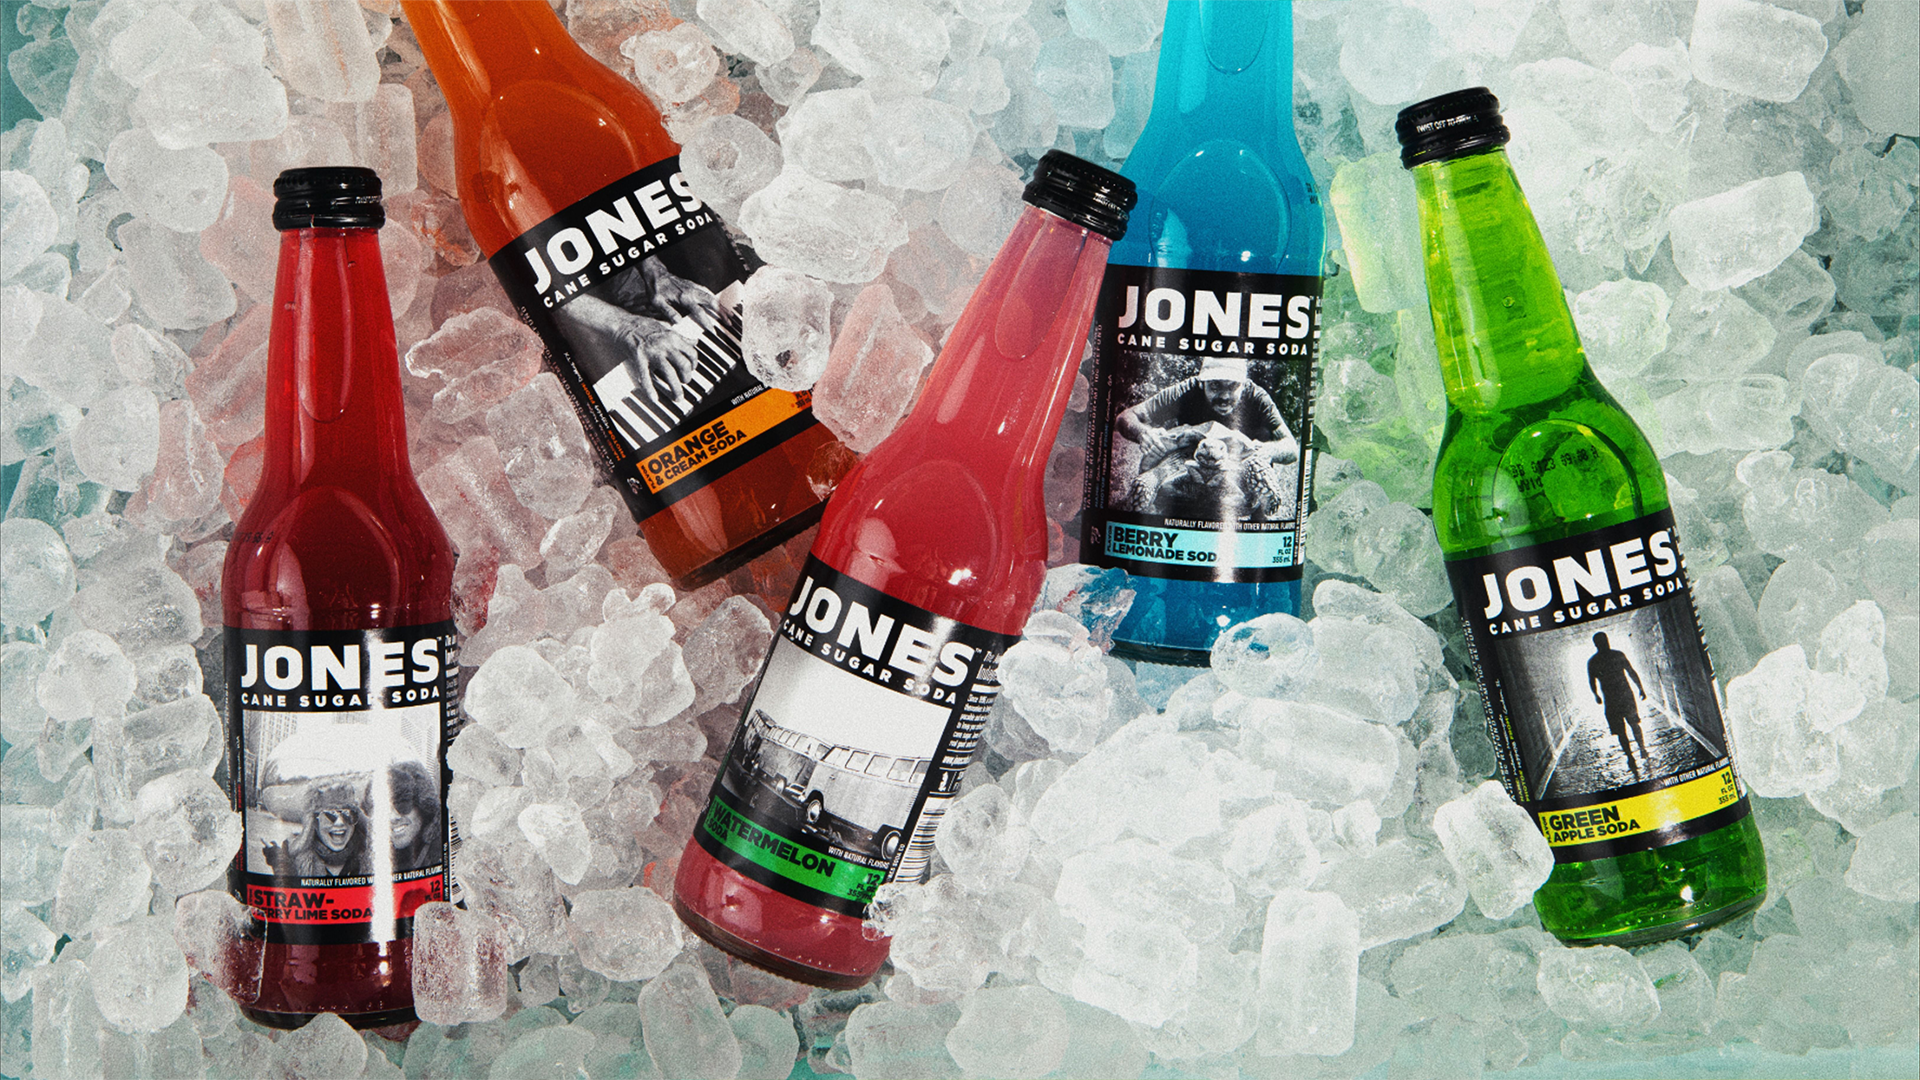 Bottles of Jones Soda on ice